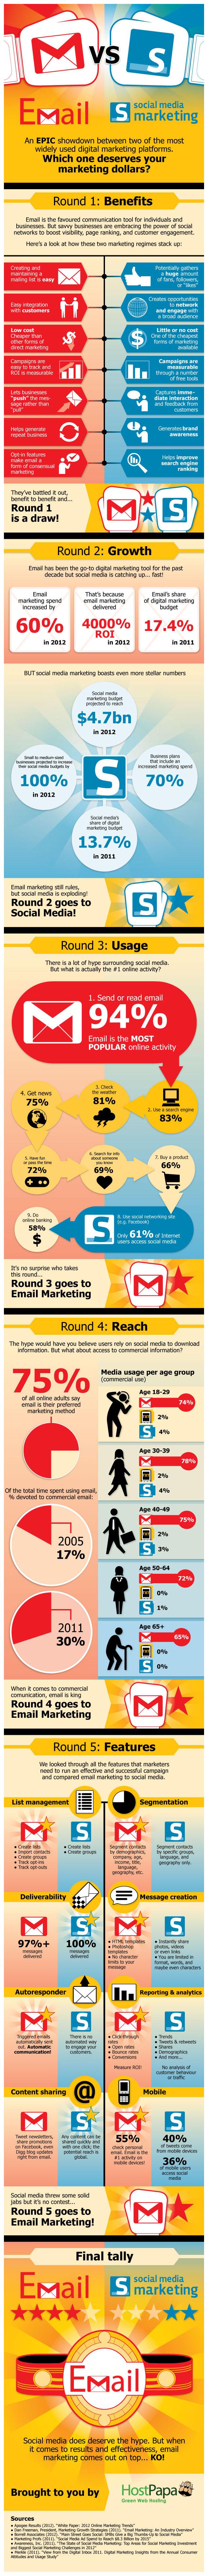 email-vs-social-media-marketing